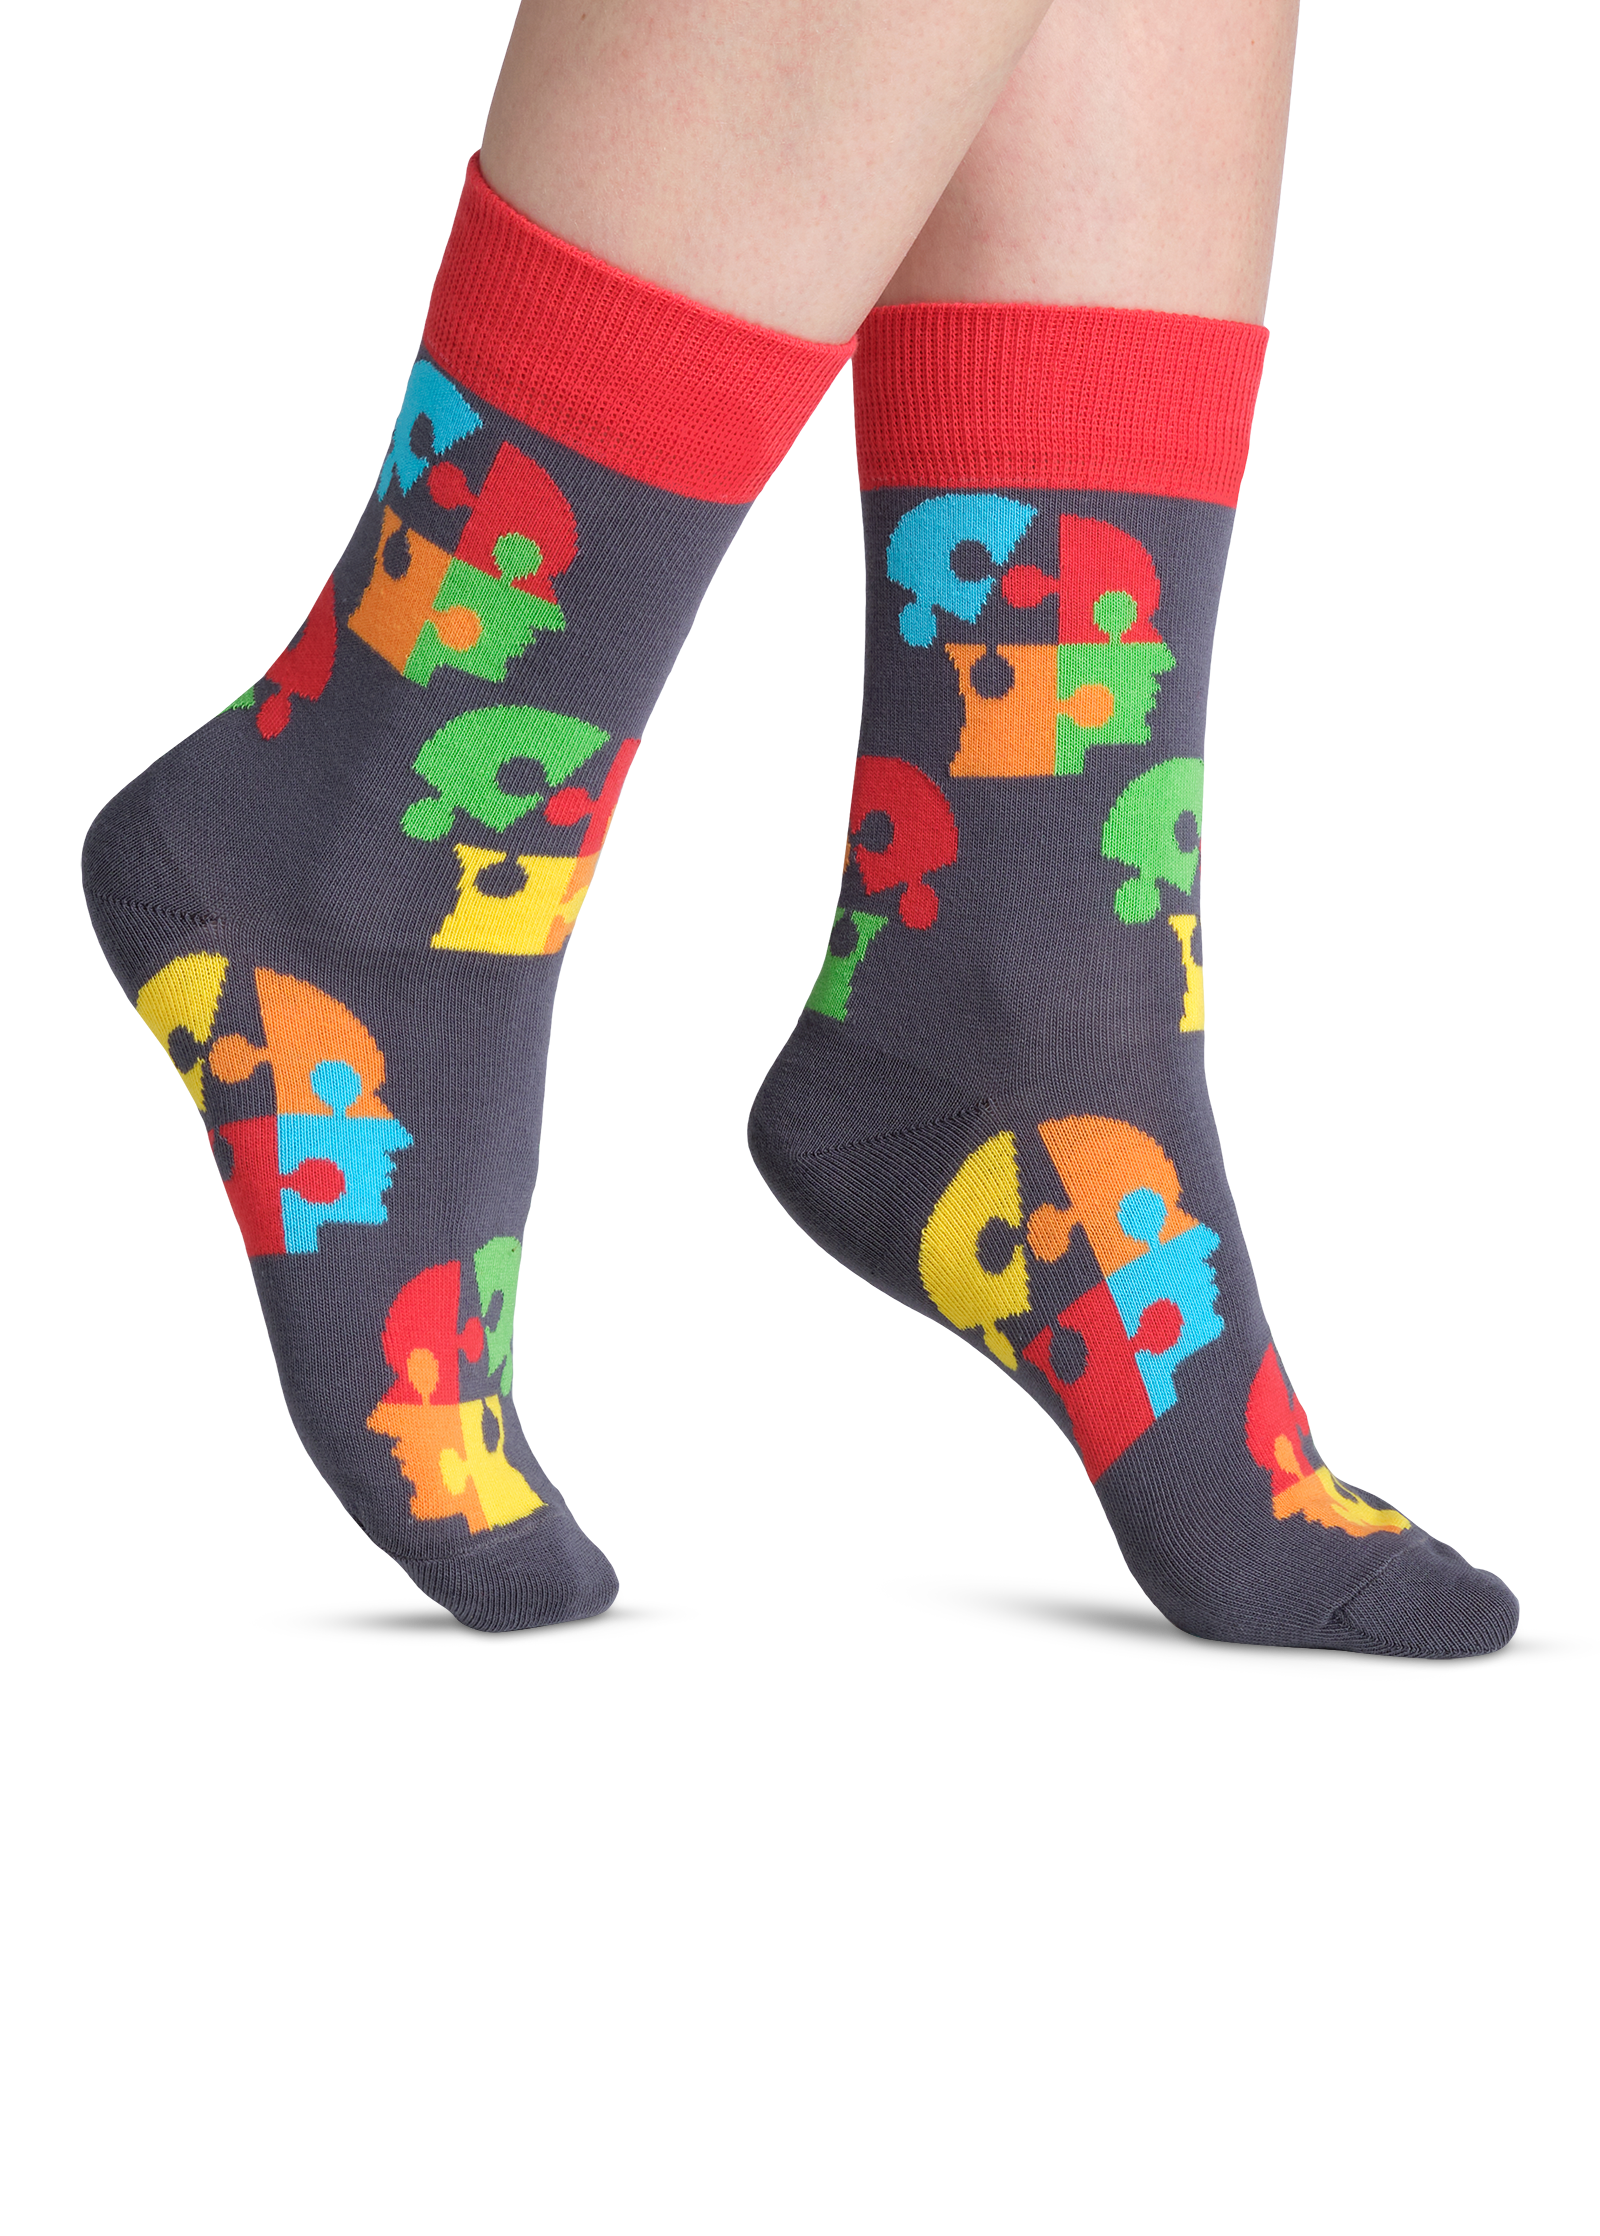 Zensah Mini-Crew Old School Chicago Socks with Anti-Blister, Seamless Toe, Reduce Fatigue, Anatomical Design, Moisture Wicking - Extra Large, Nylon/